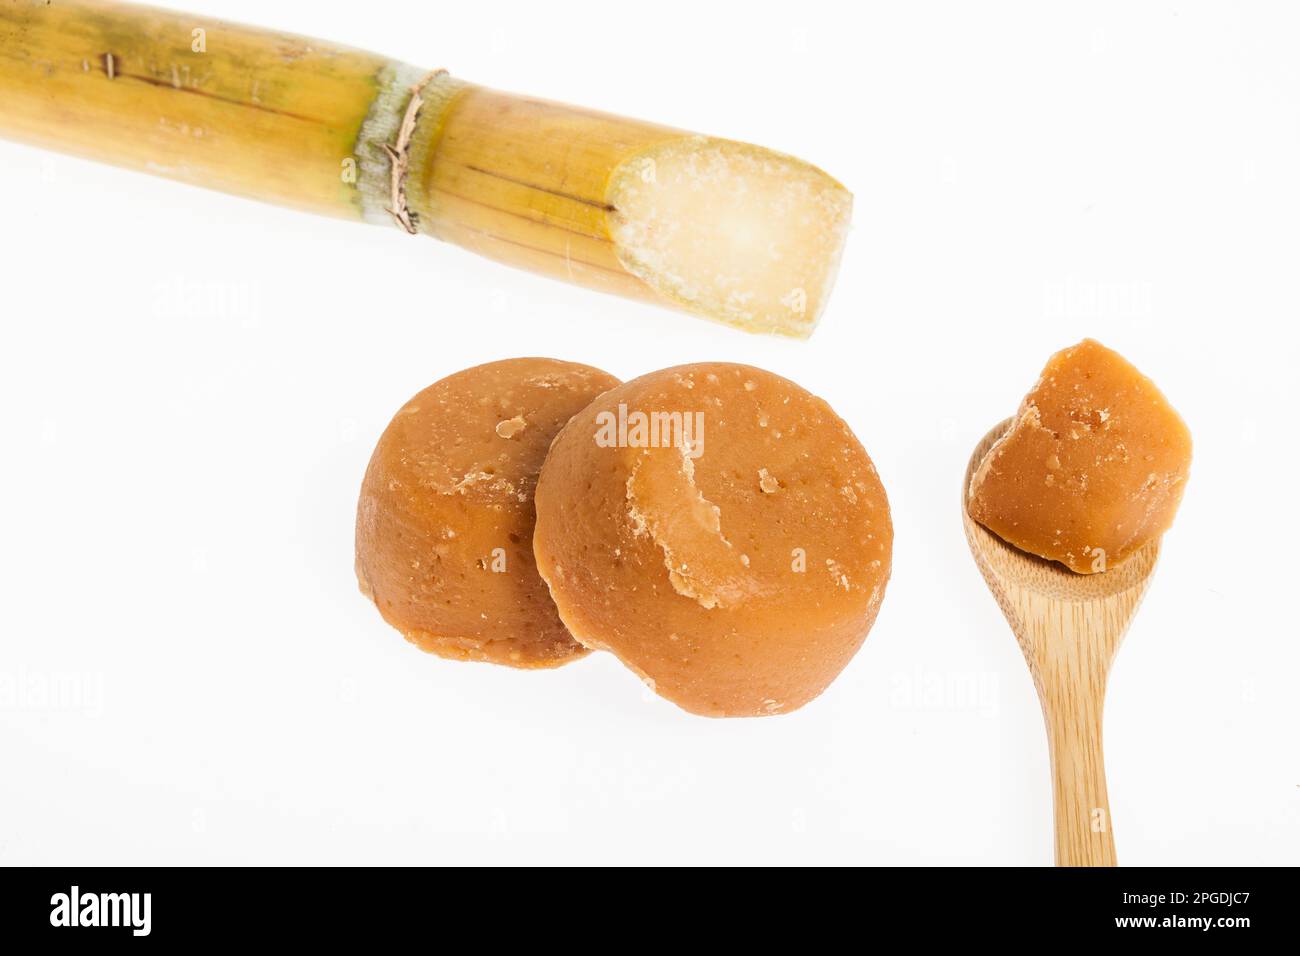 Panela Or chancaca from sugar cane; Photo on white background. Stock Photo